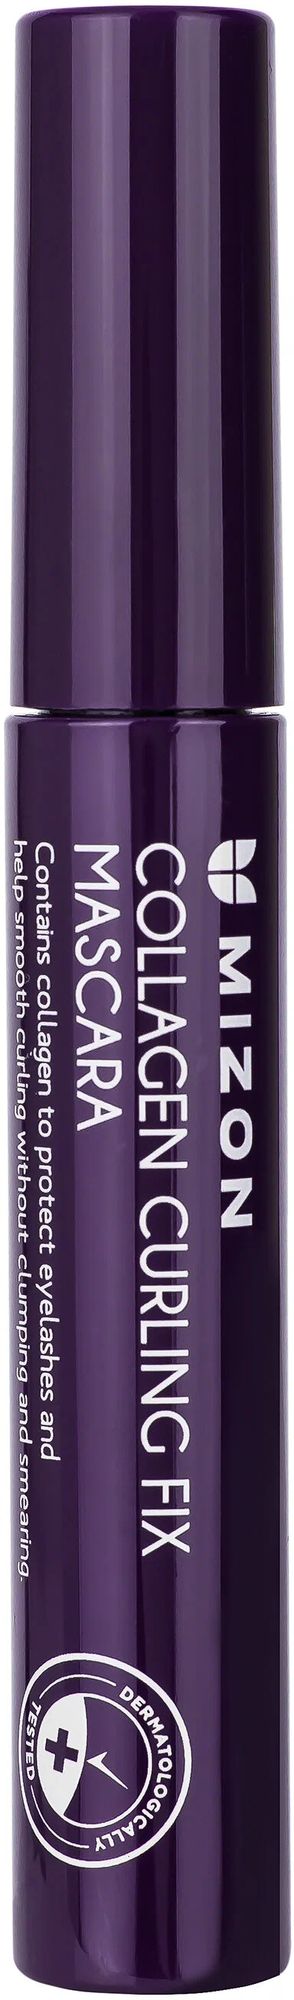 Тушь Mizon Collagen Curling Mascara 600299 - фото 1